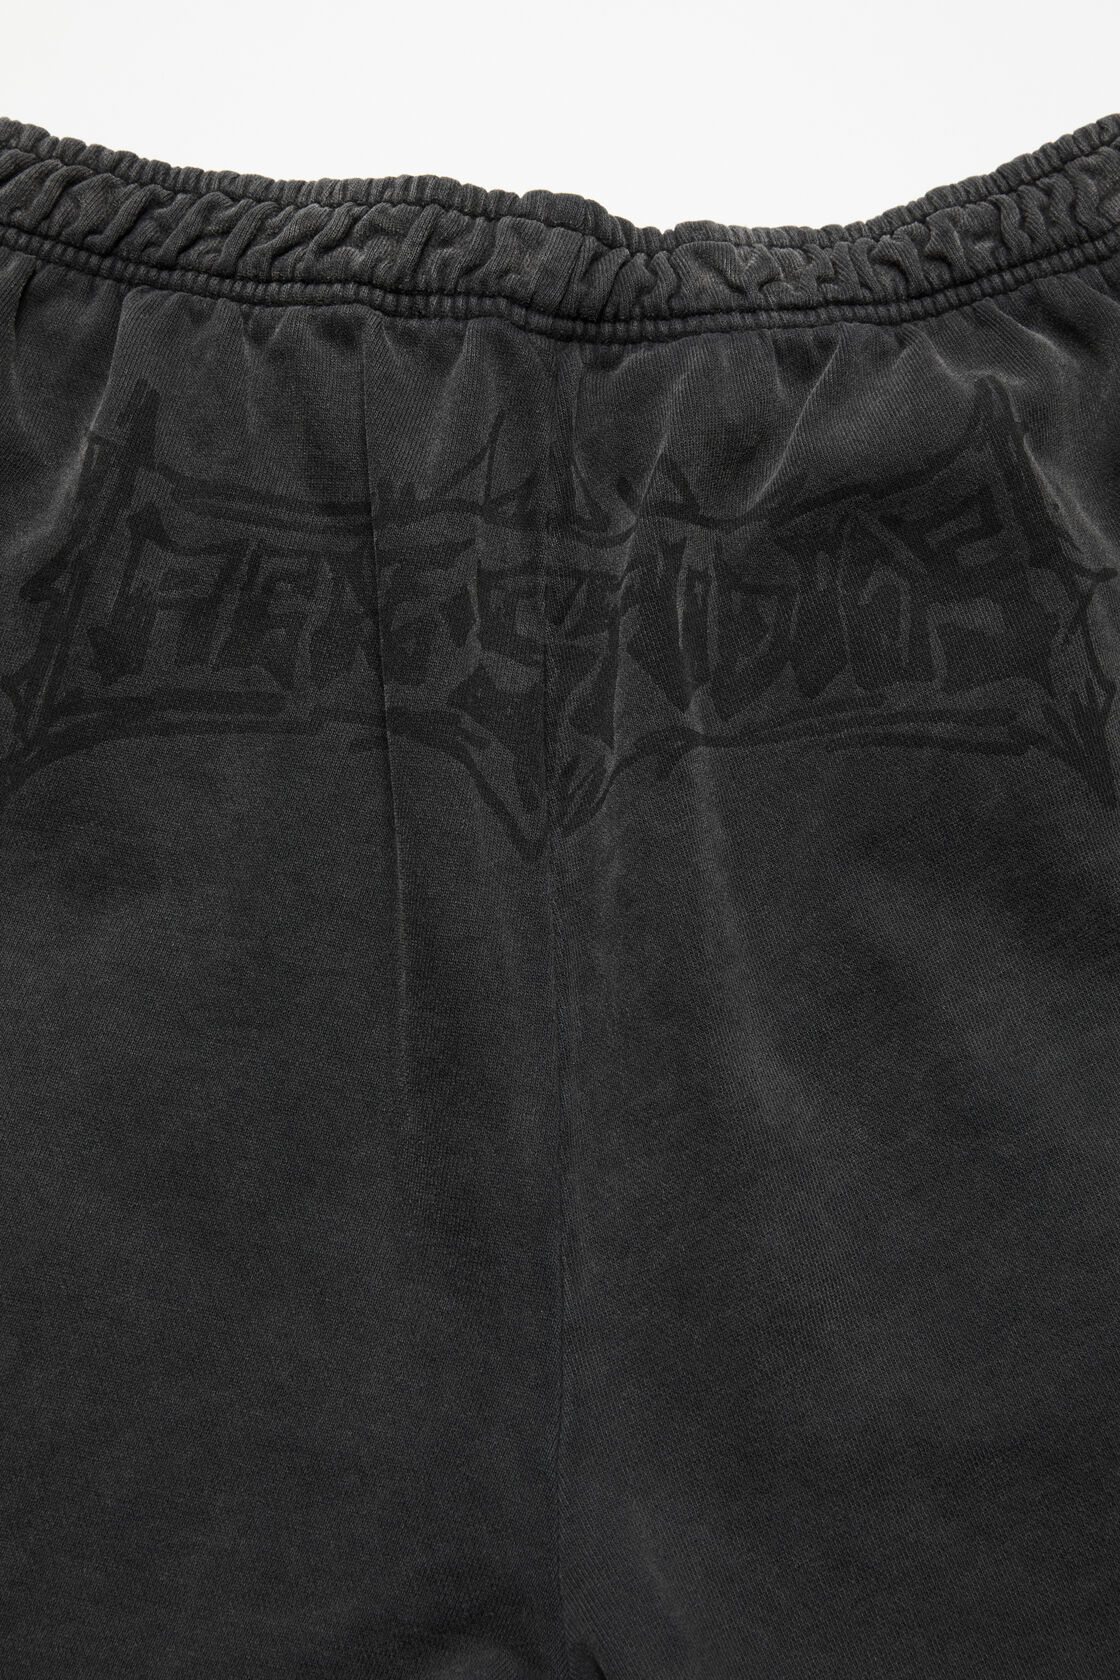 ACNE STUDIOS Backprinted  Sweatpant in Faded Black